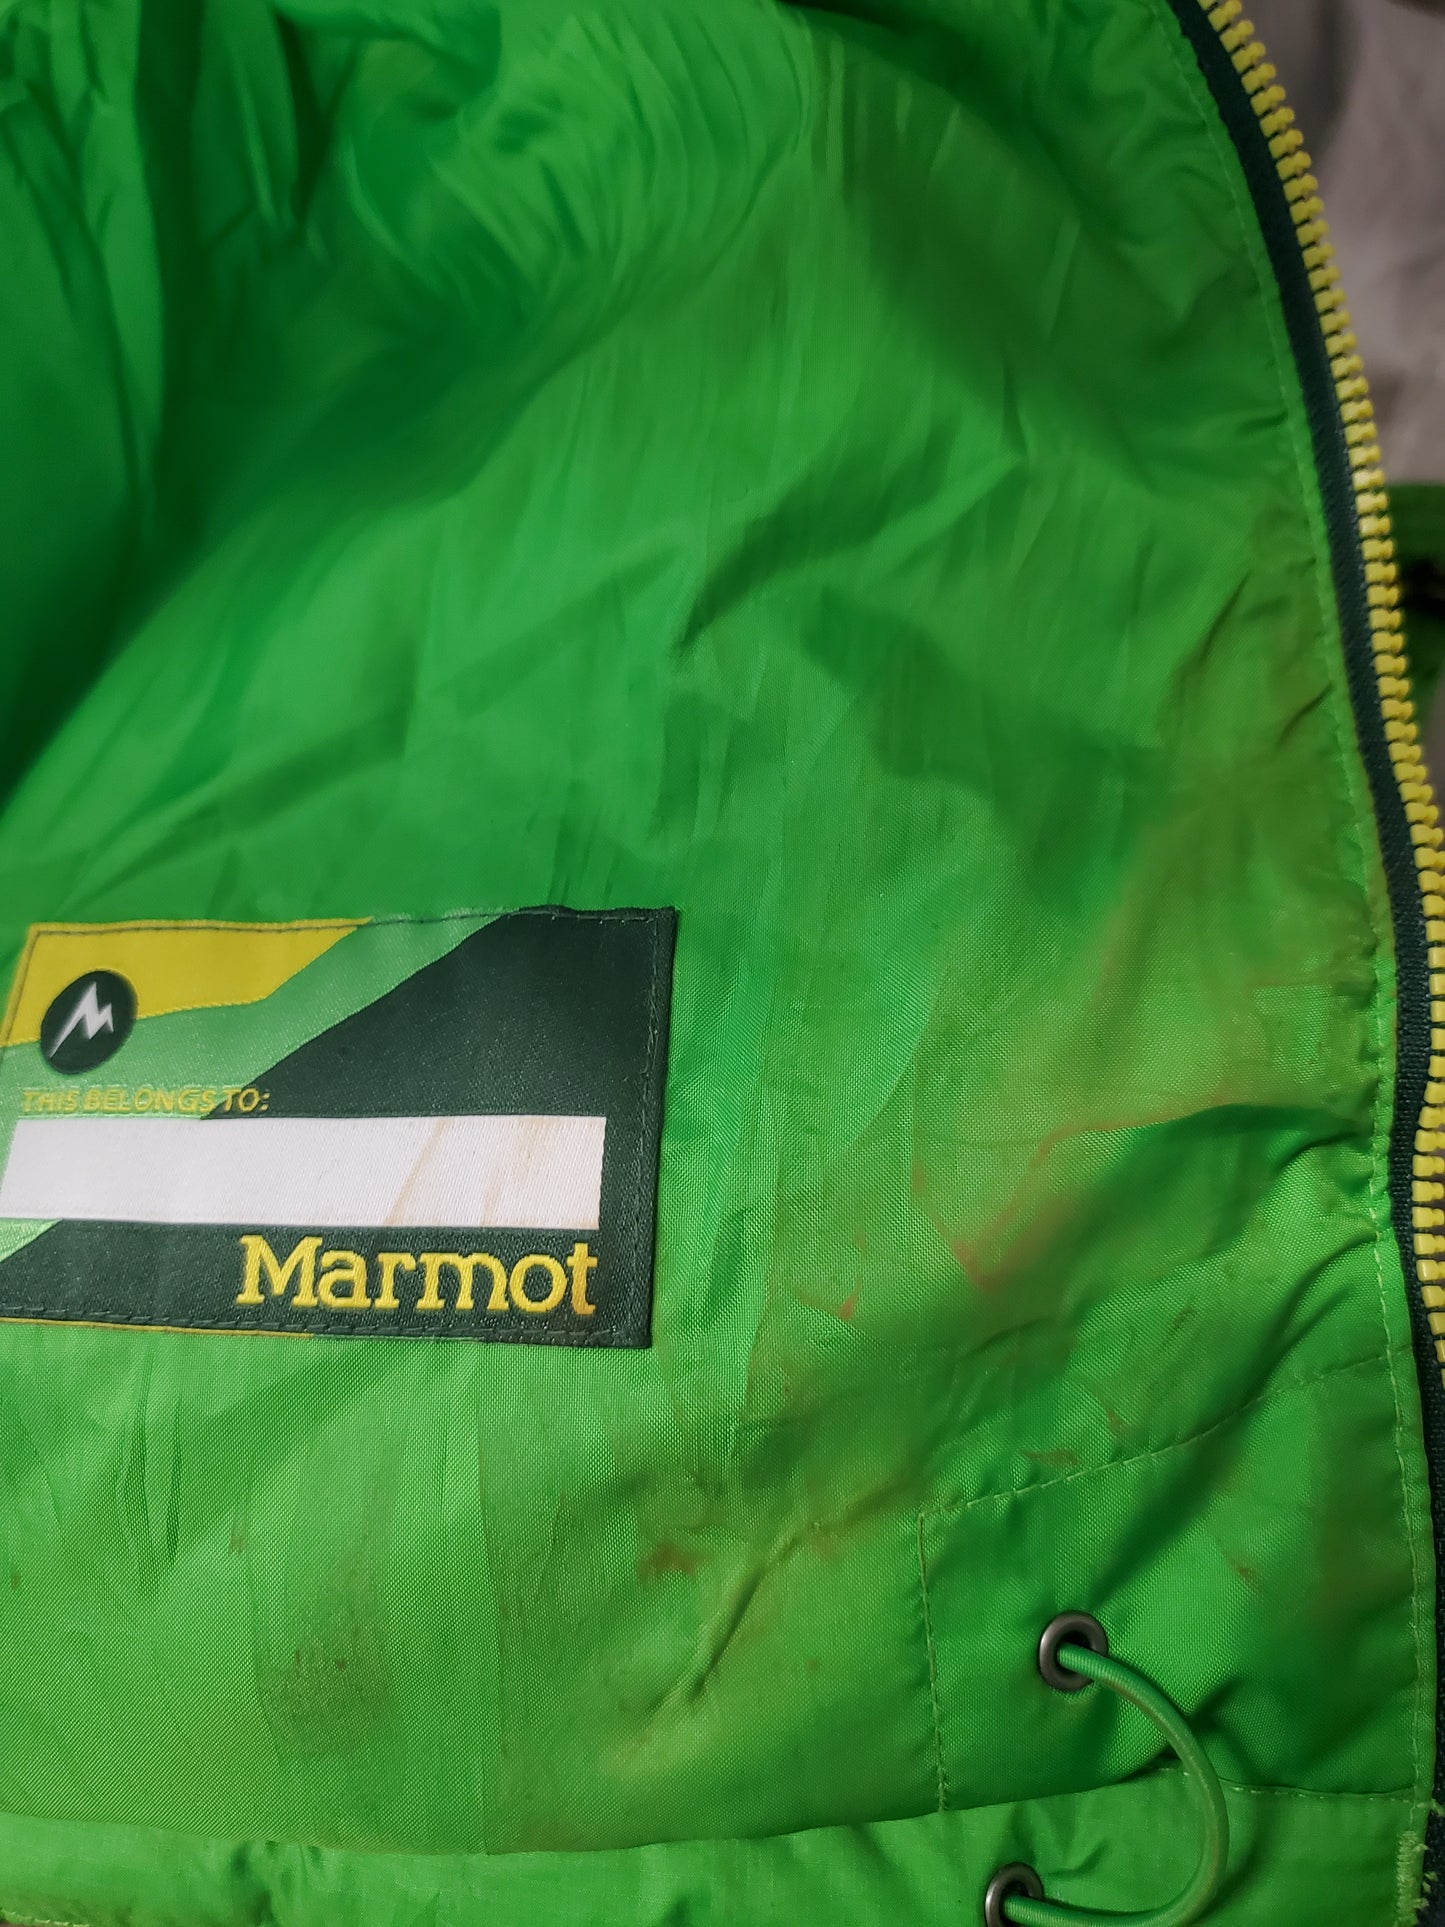 Womens 2012 Marmot 650 Fill Down Jacket Size XL